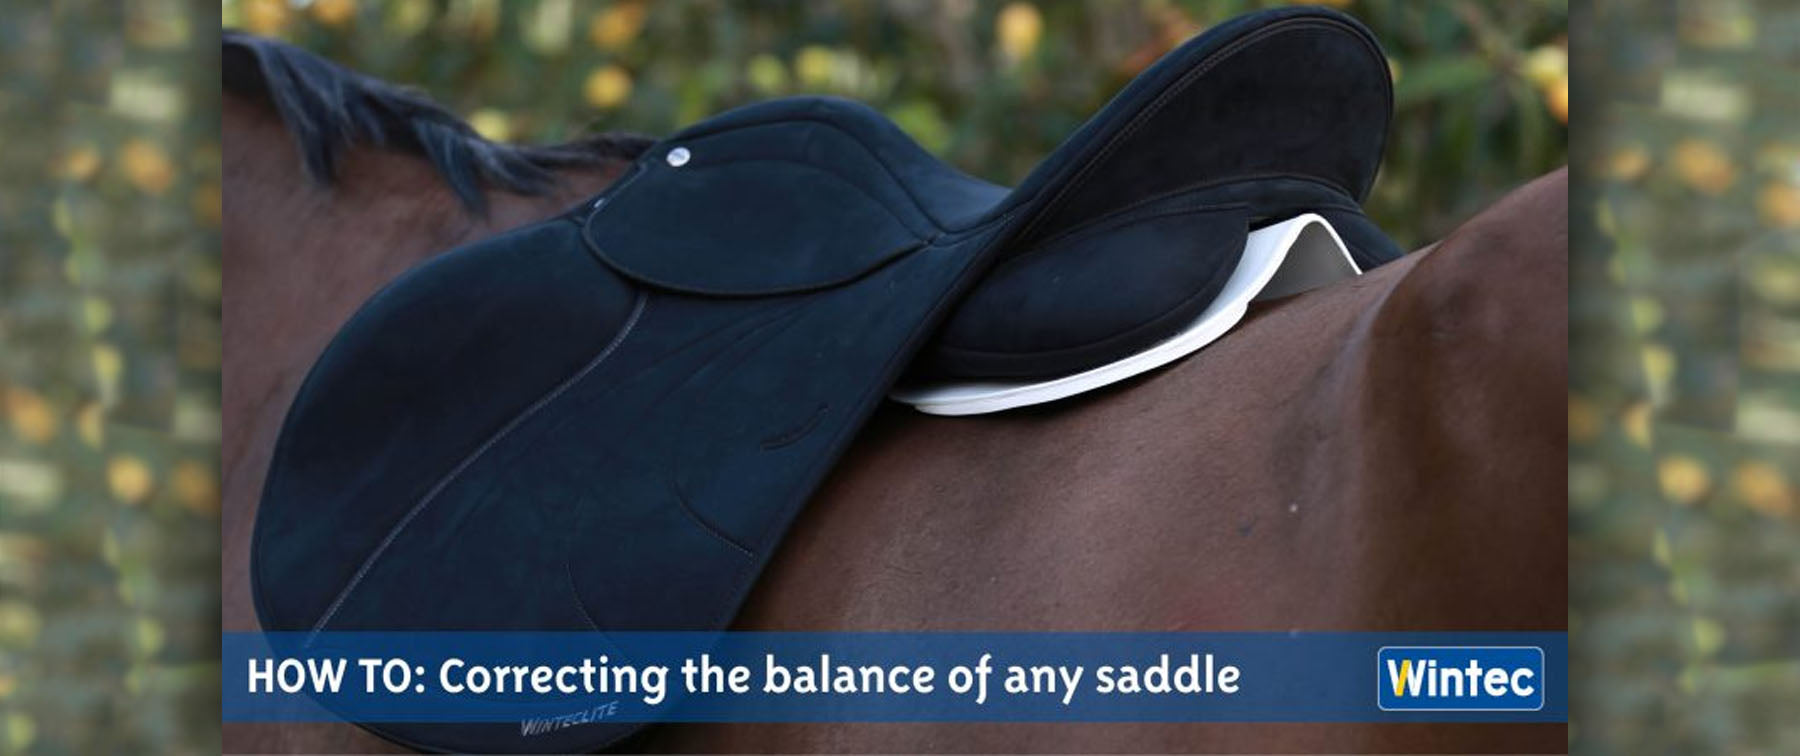 How to easily correct your saddle balance